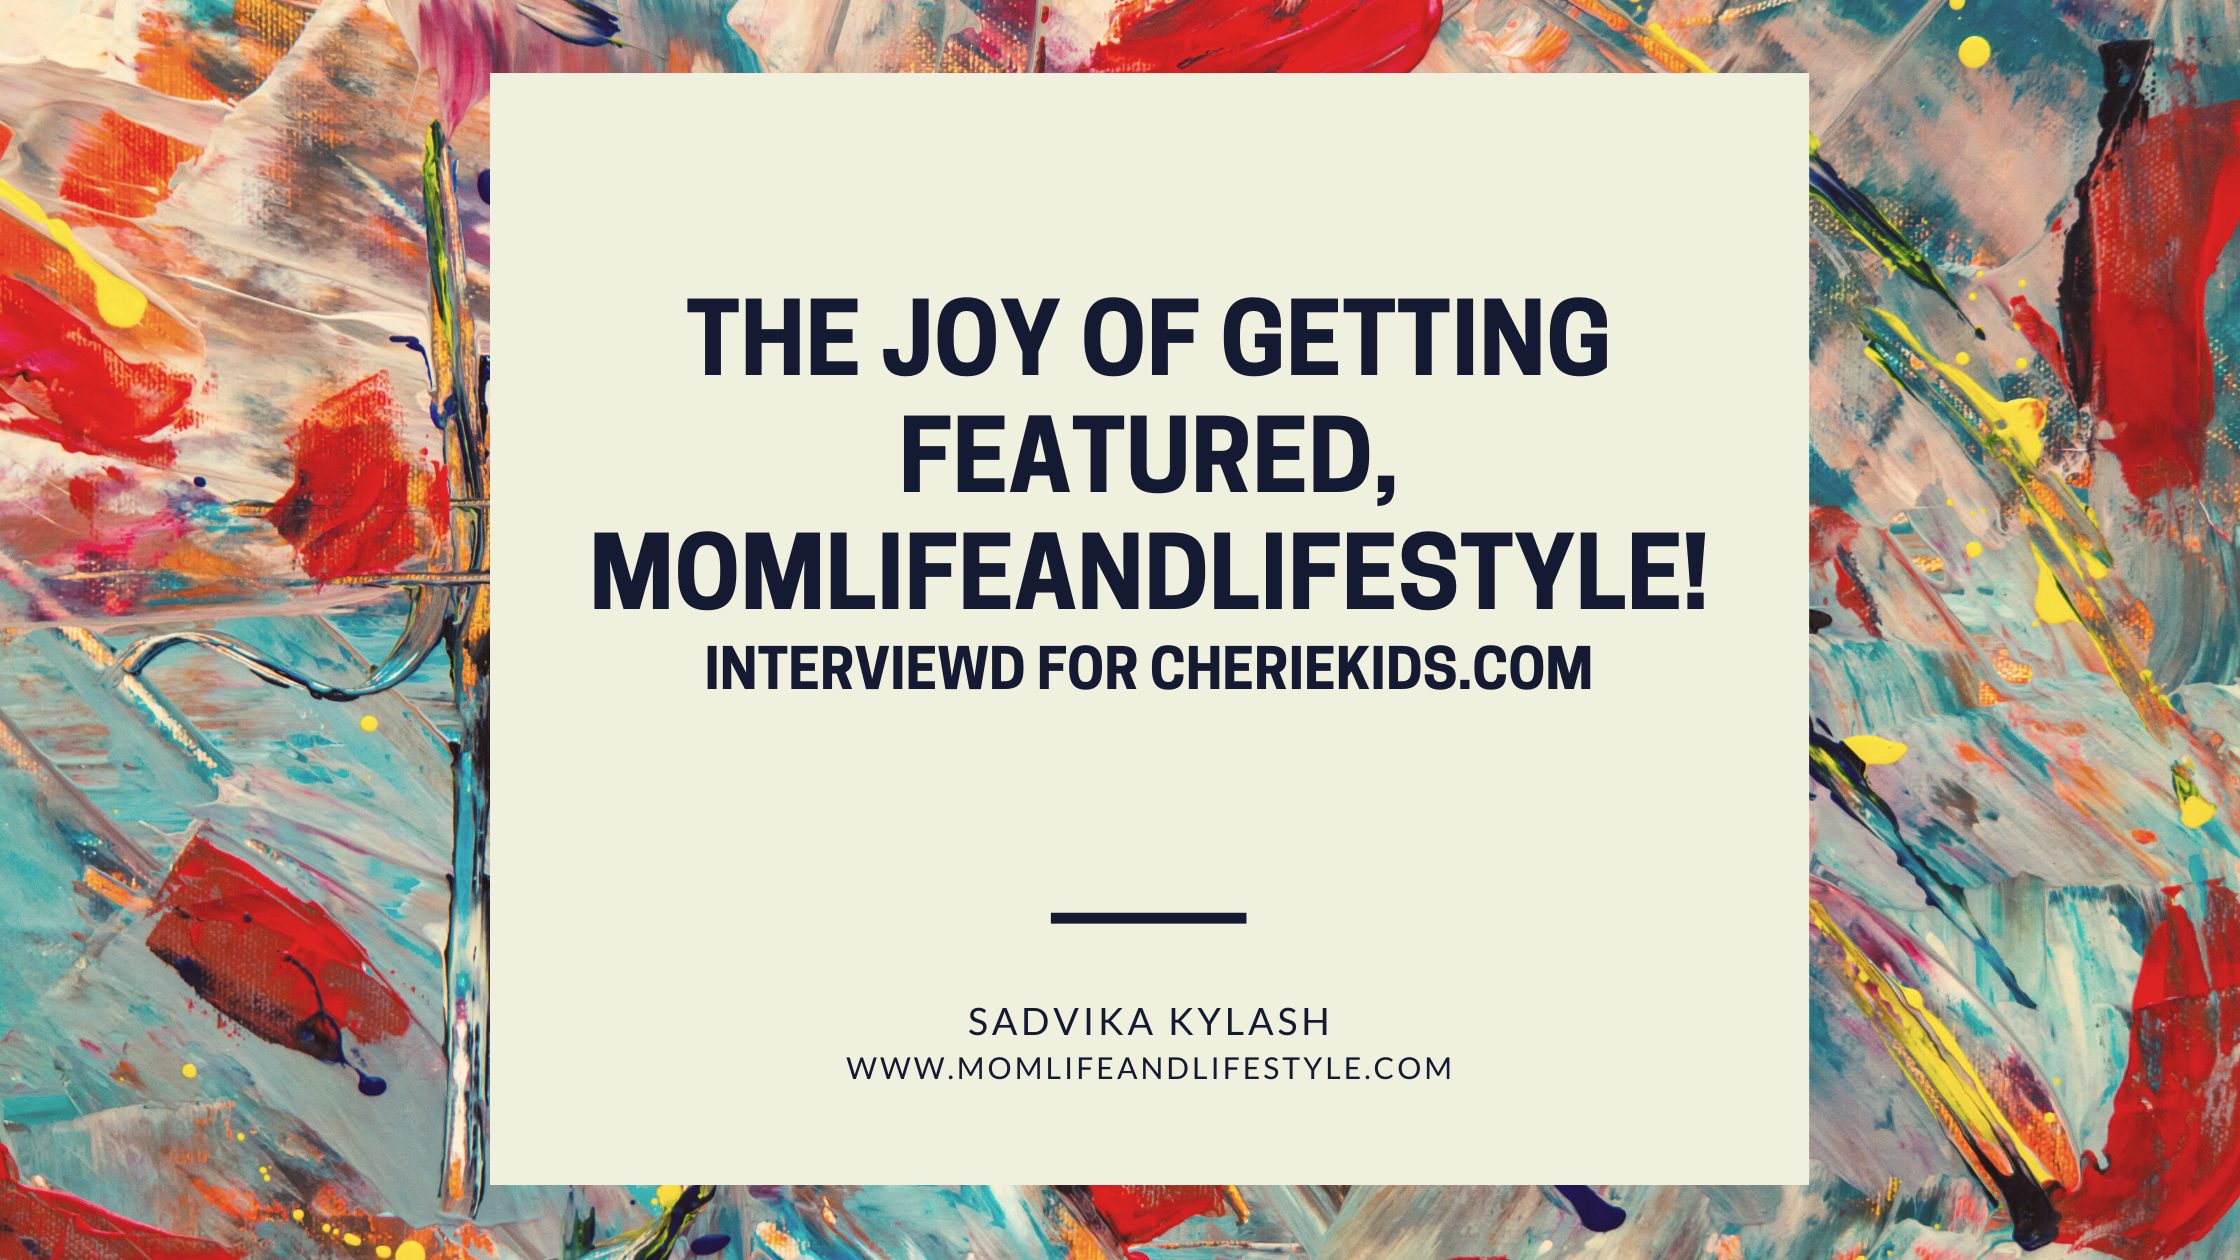 The joy of getting featured, momlifeandlifestyle